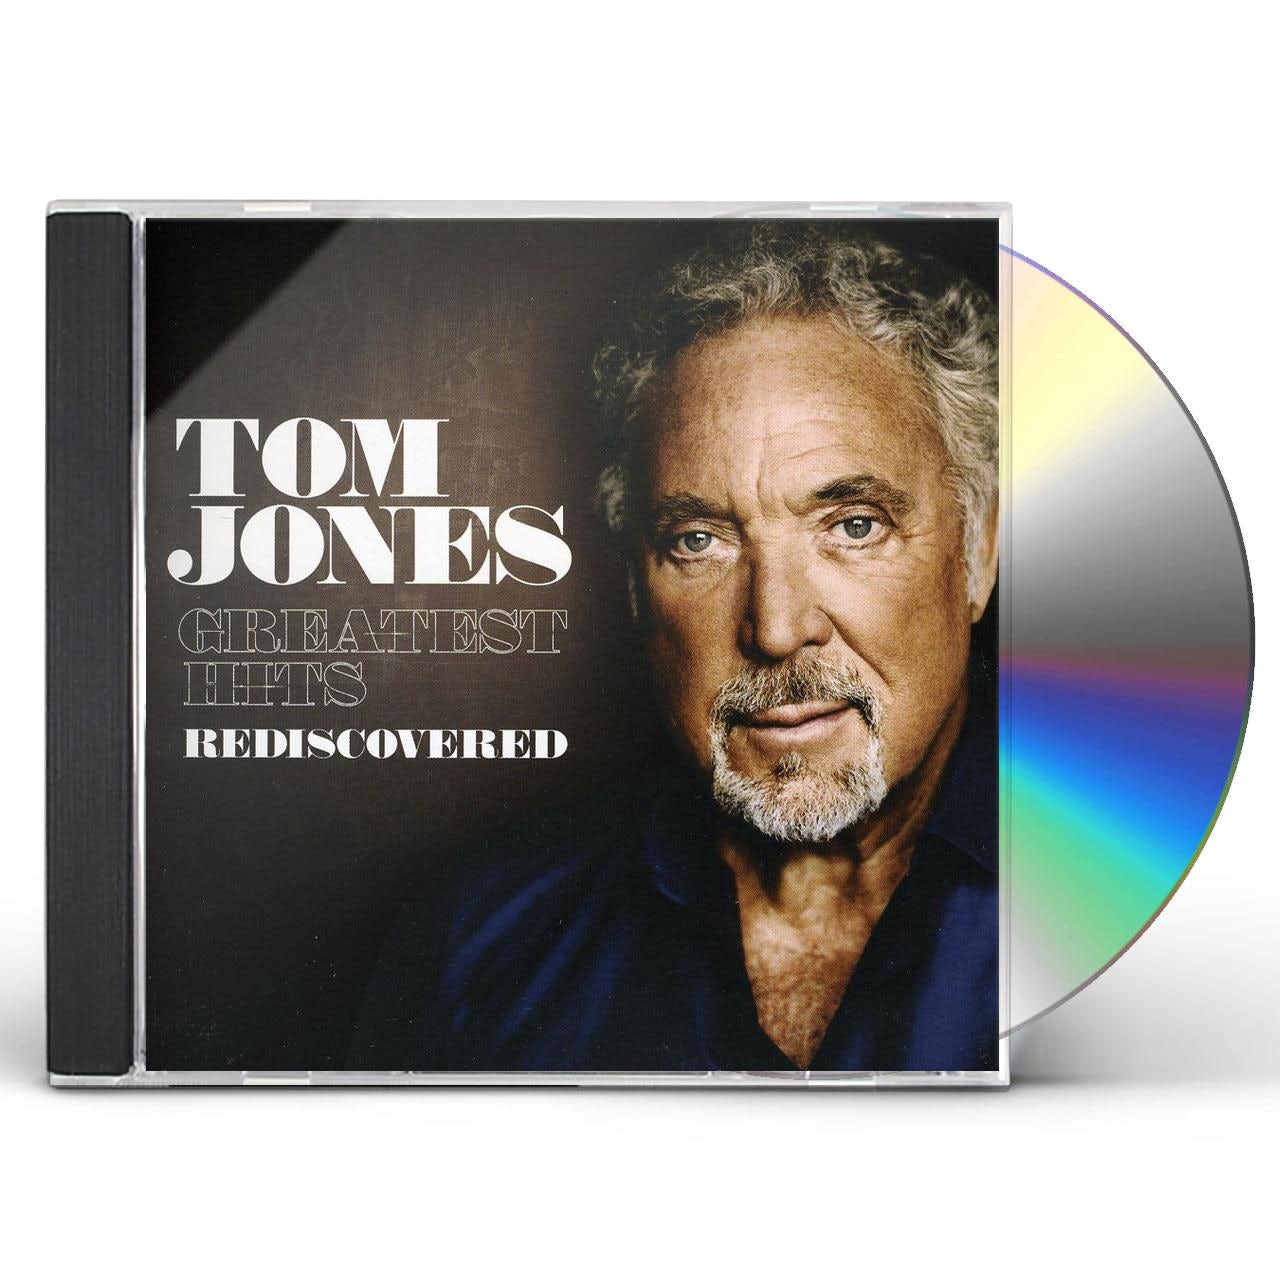 Tom Jones Cd Greatest Hits Rediscovered Rukahore Shop